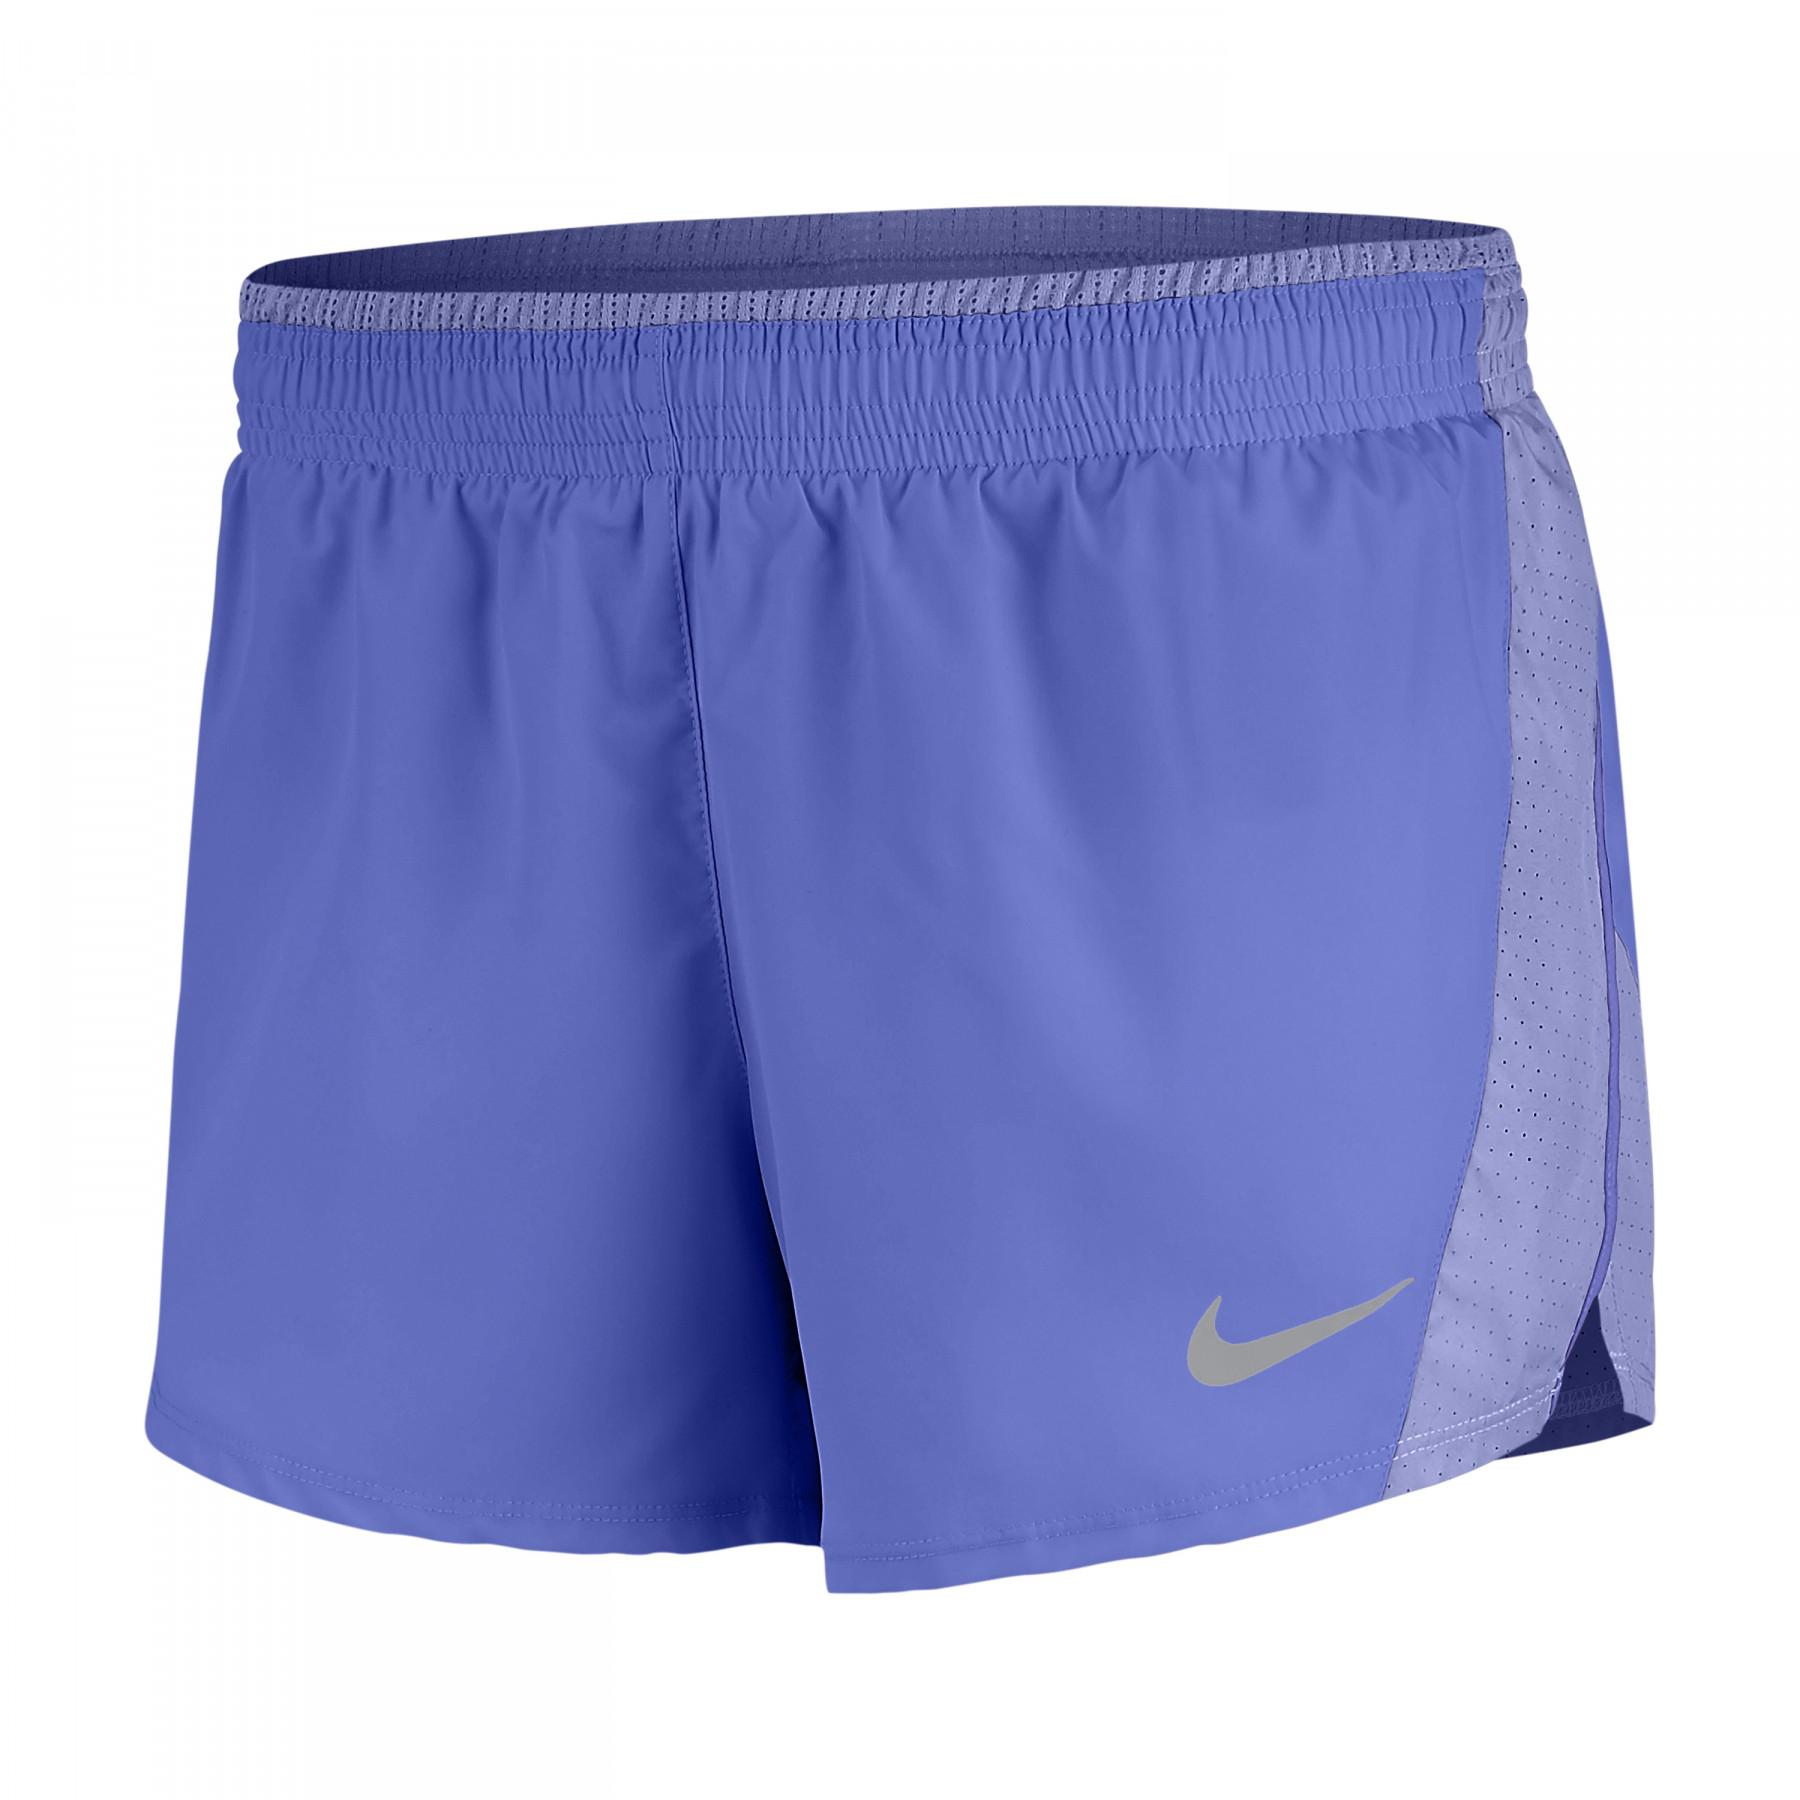 Pantalón corto de mujer Nike Basic